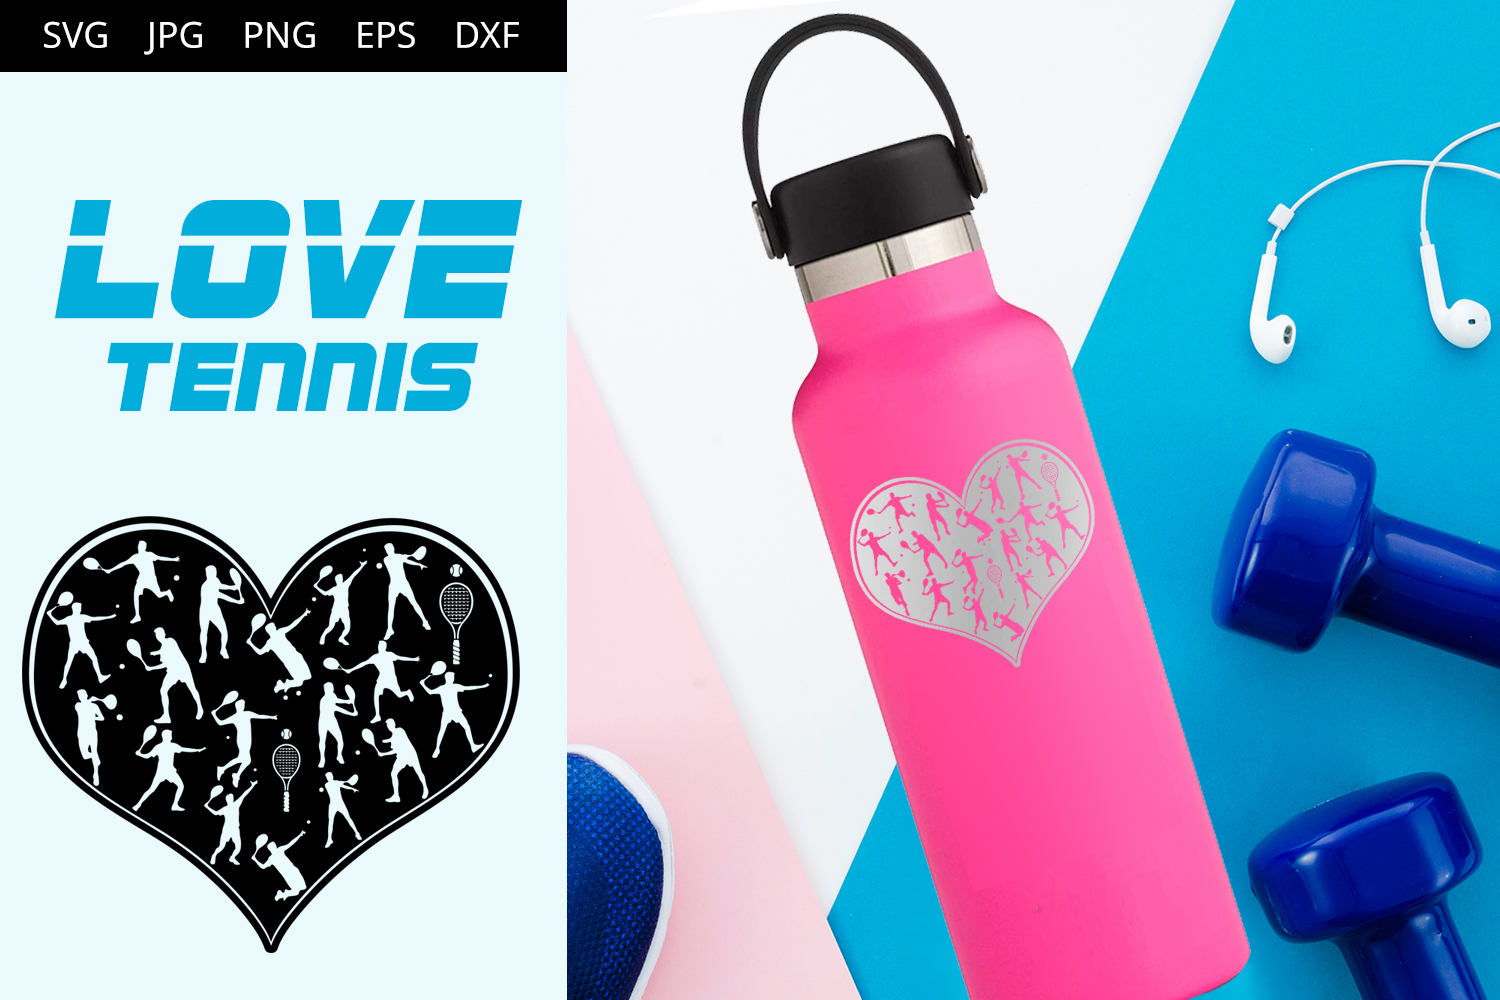 Download Love Tennis - Men SVG Vector (359909) | Illustrations ...